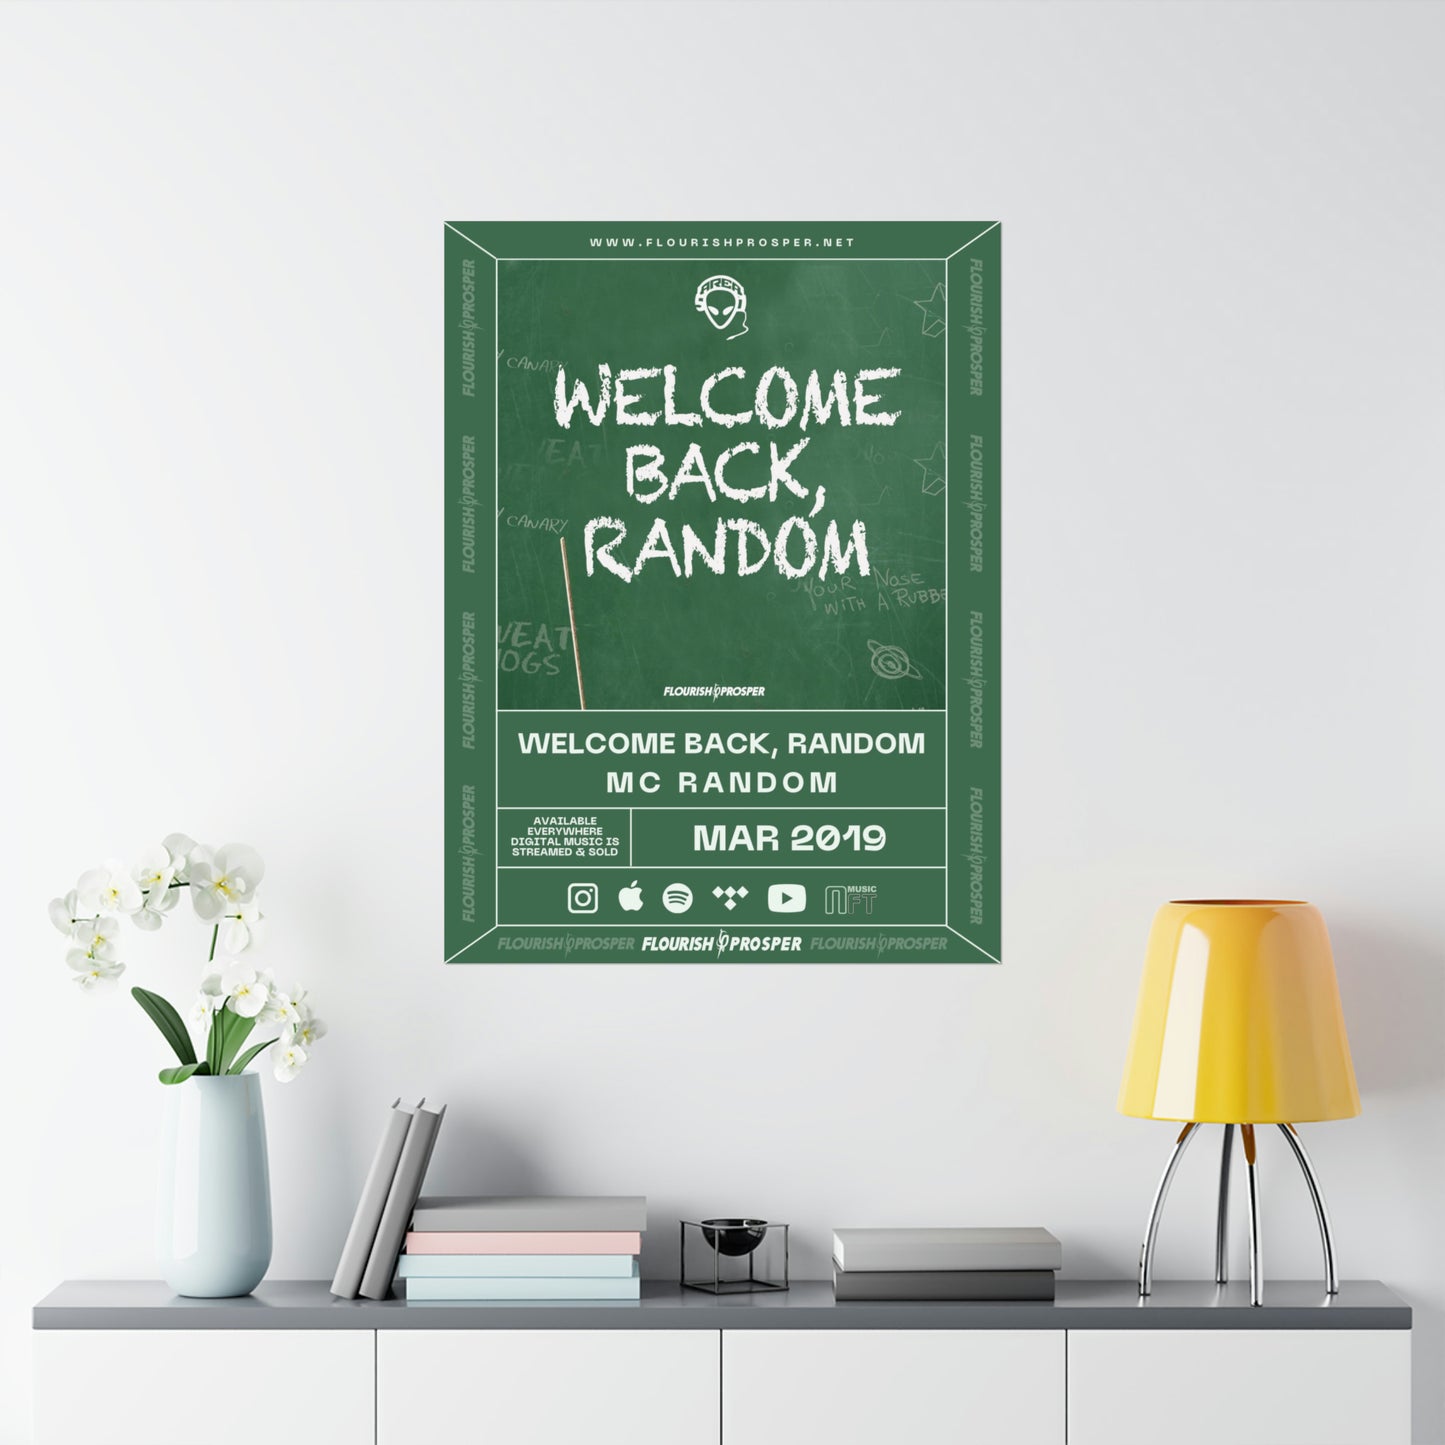 MC Random "Welcome Back, Random" Matte Vertical Posters